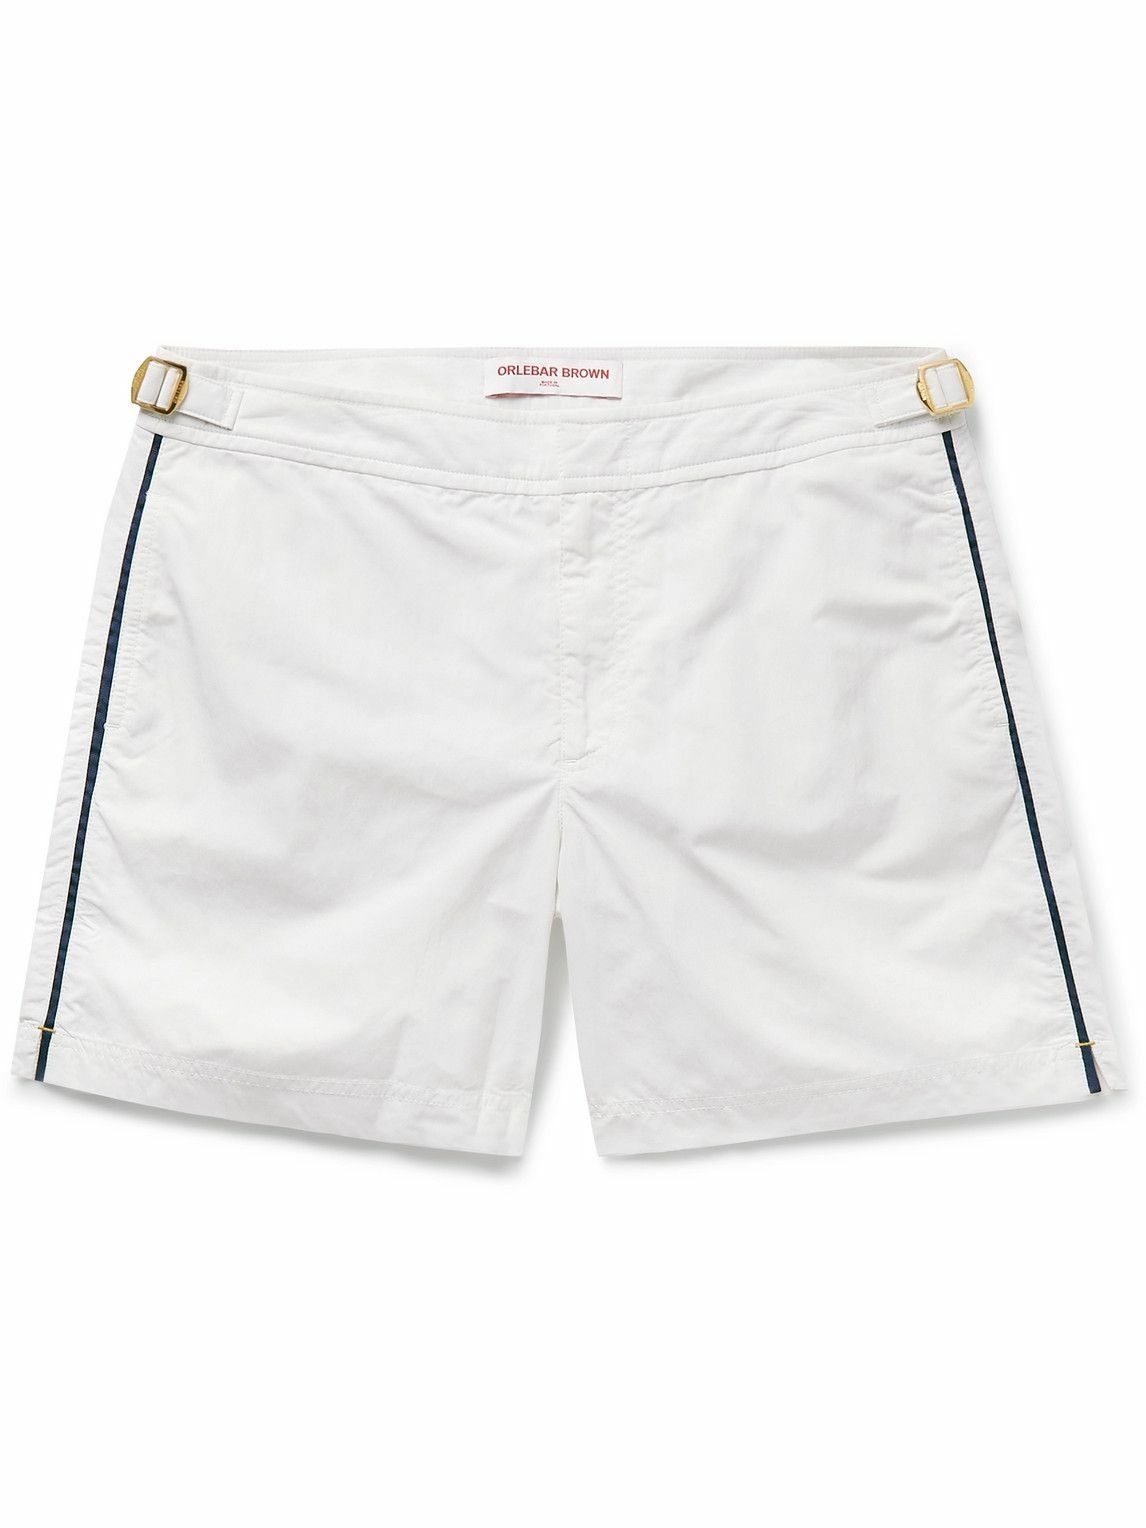 Orlebar Brown - Bulldog Mid-Length Striped Swim Shorts - White Orlebar ...